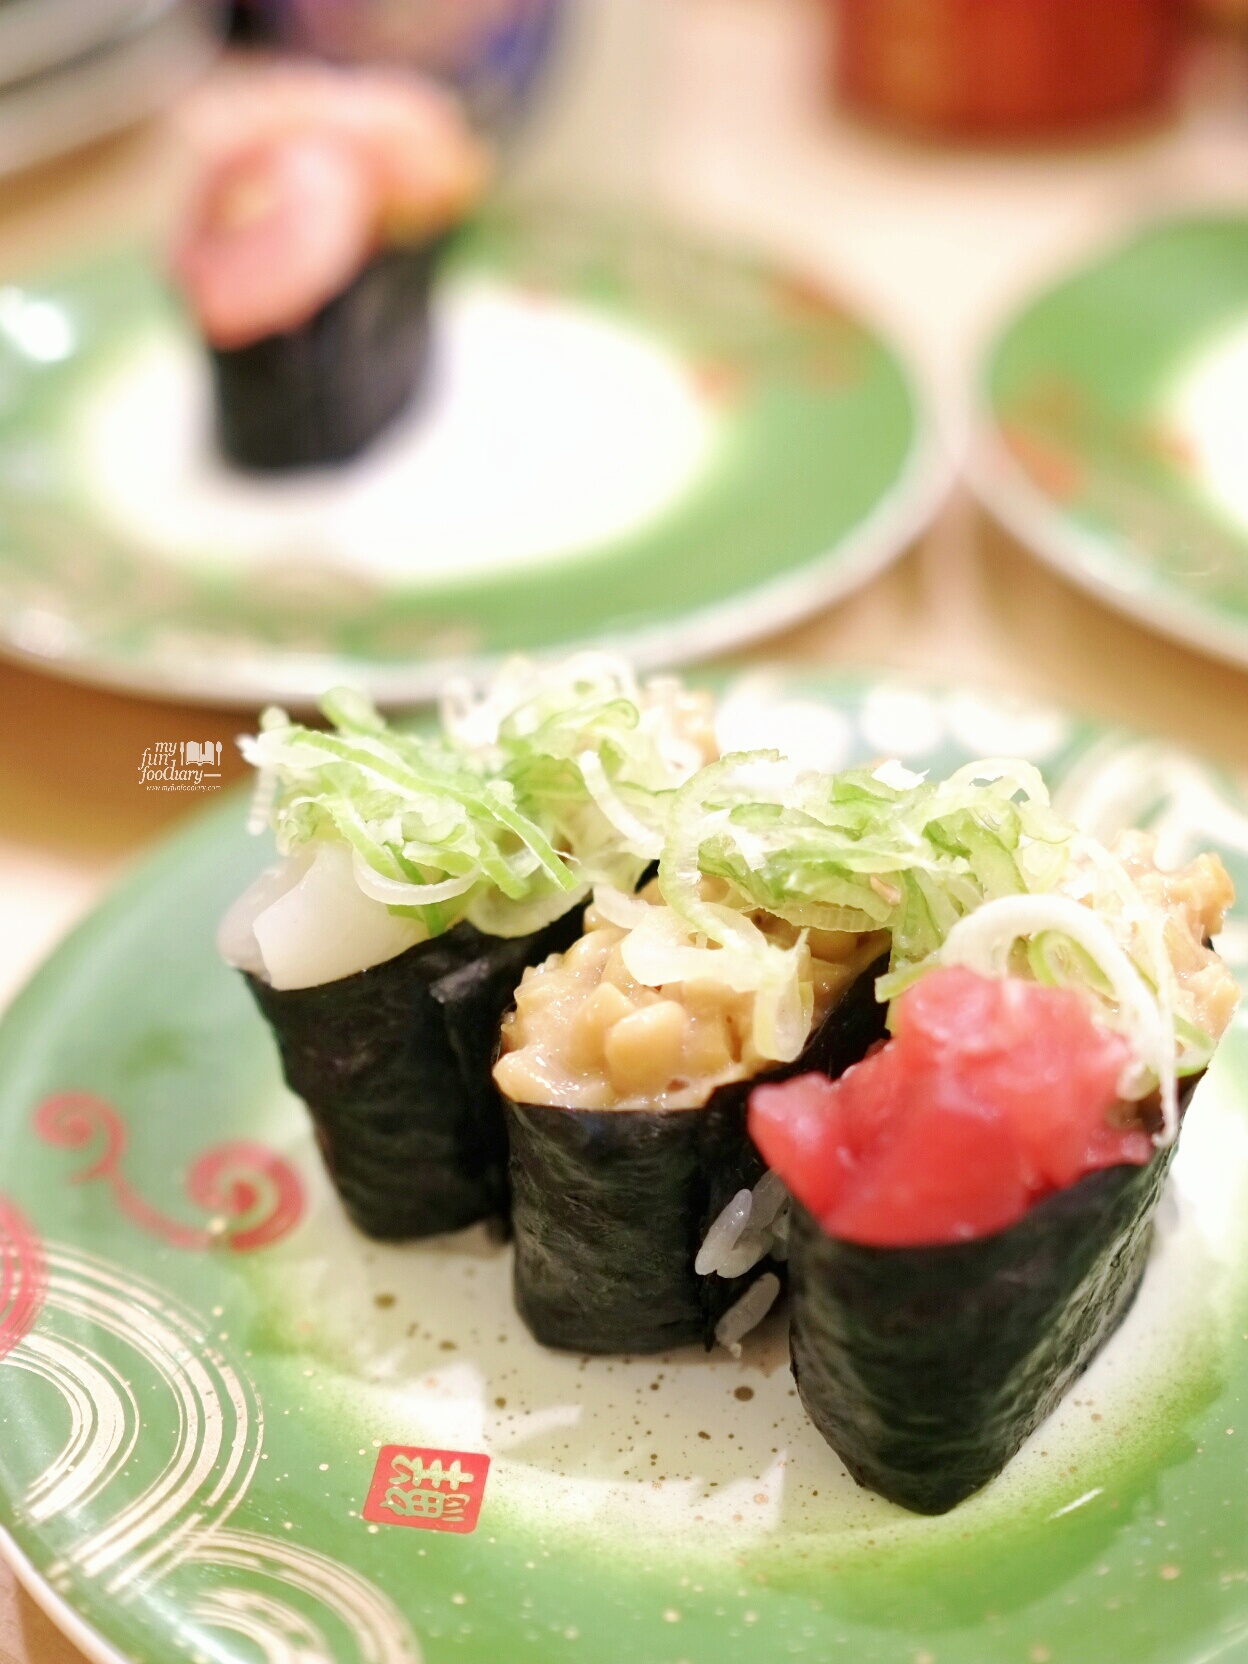 Squid Corn and Tuna Sushi at Toriton Sushi by Myfunfoodiary